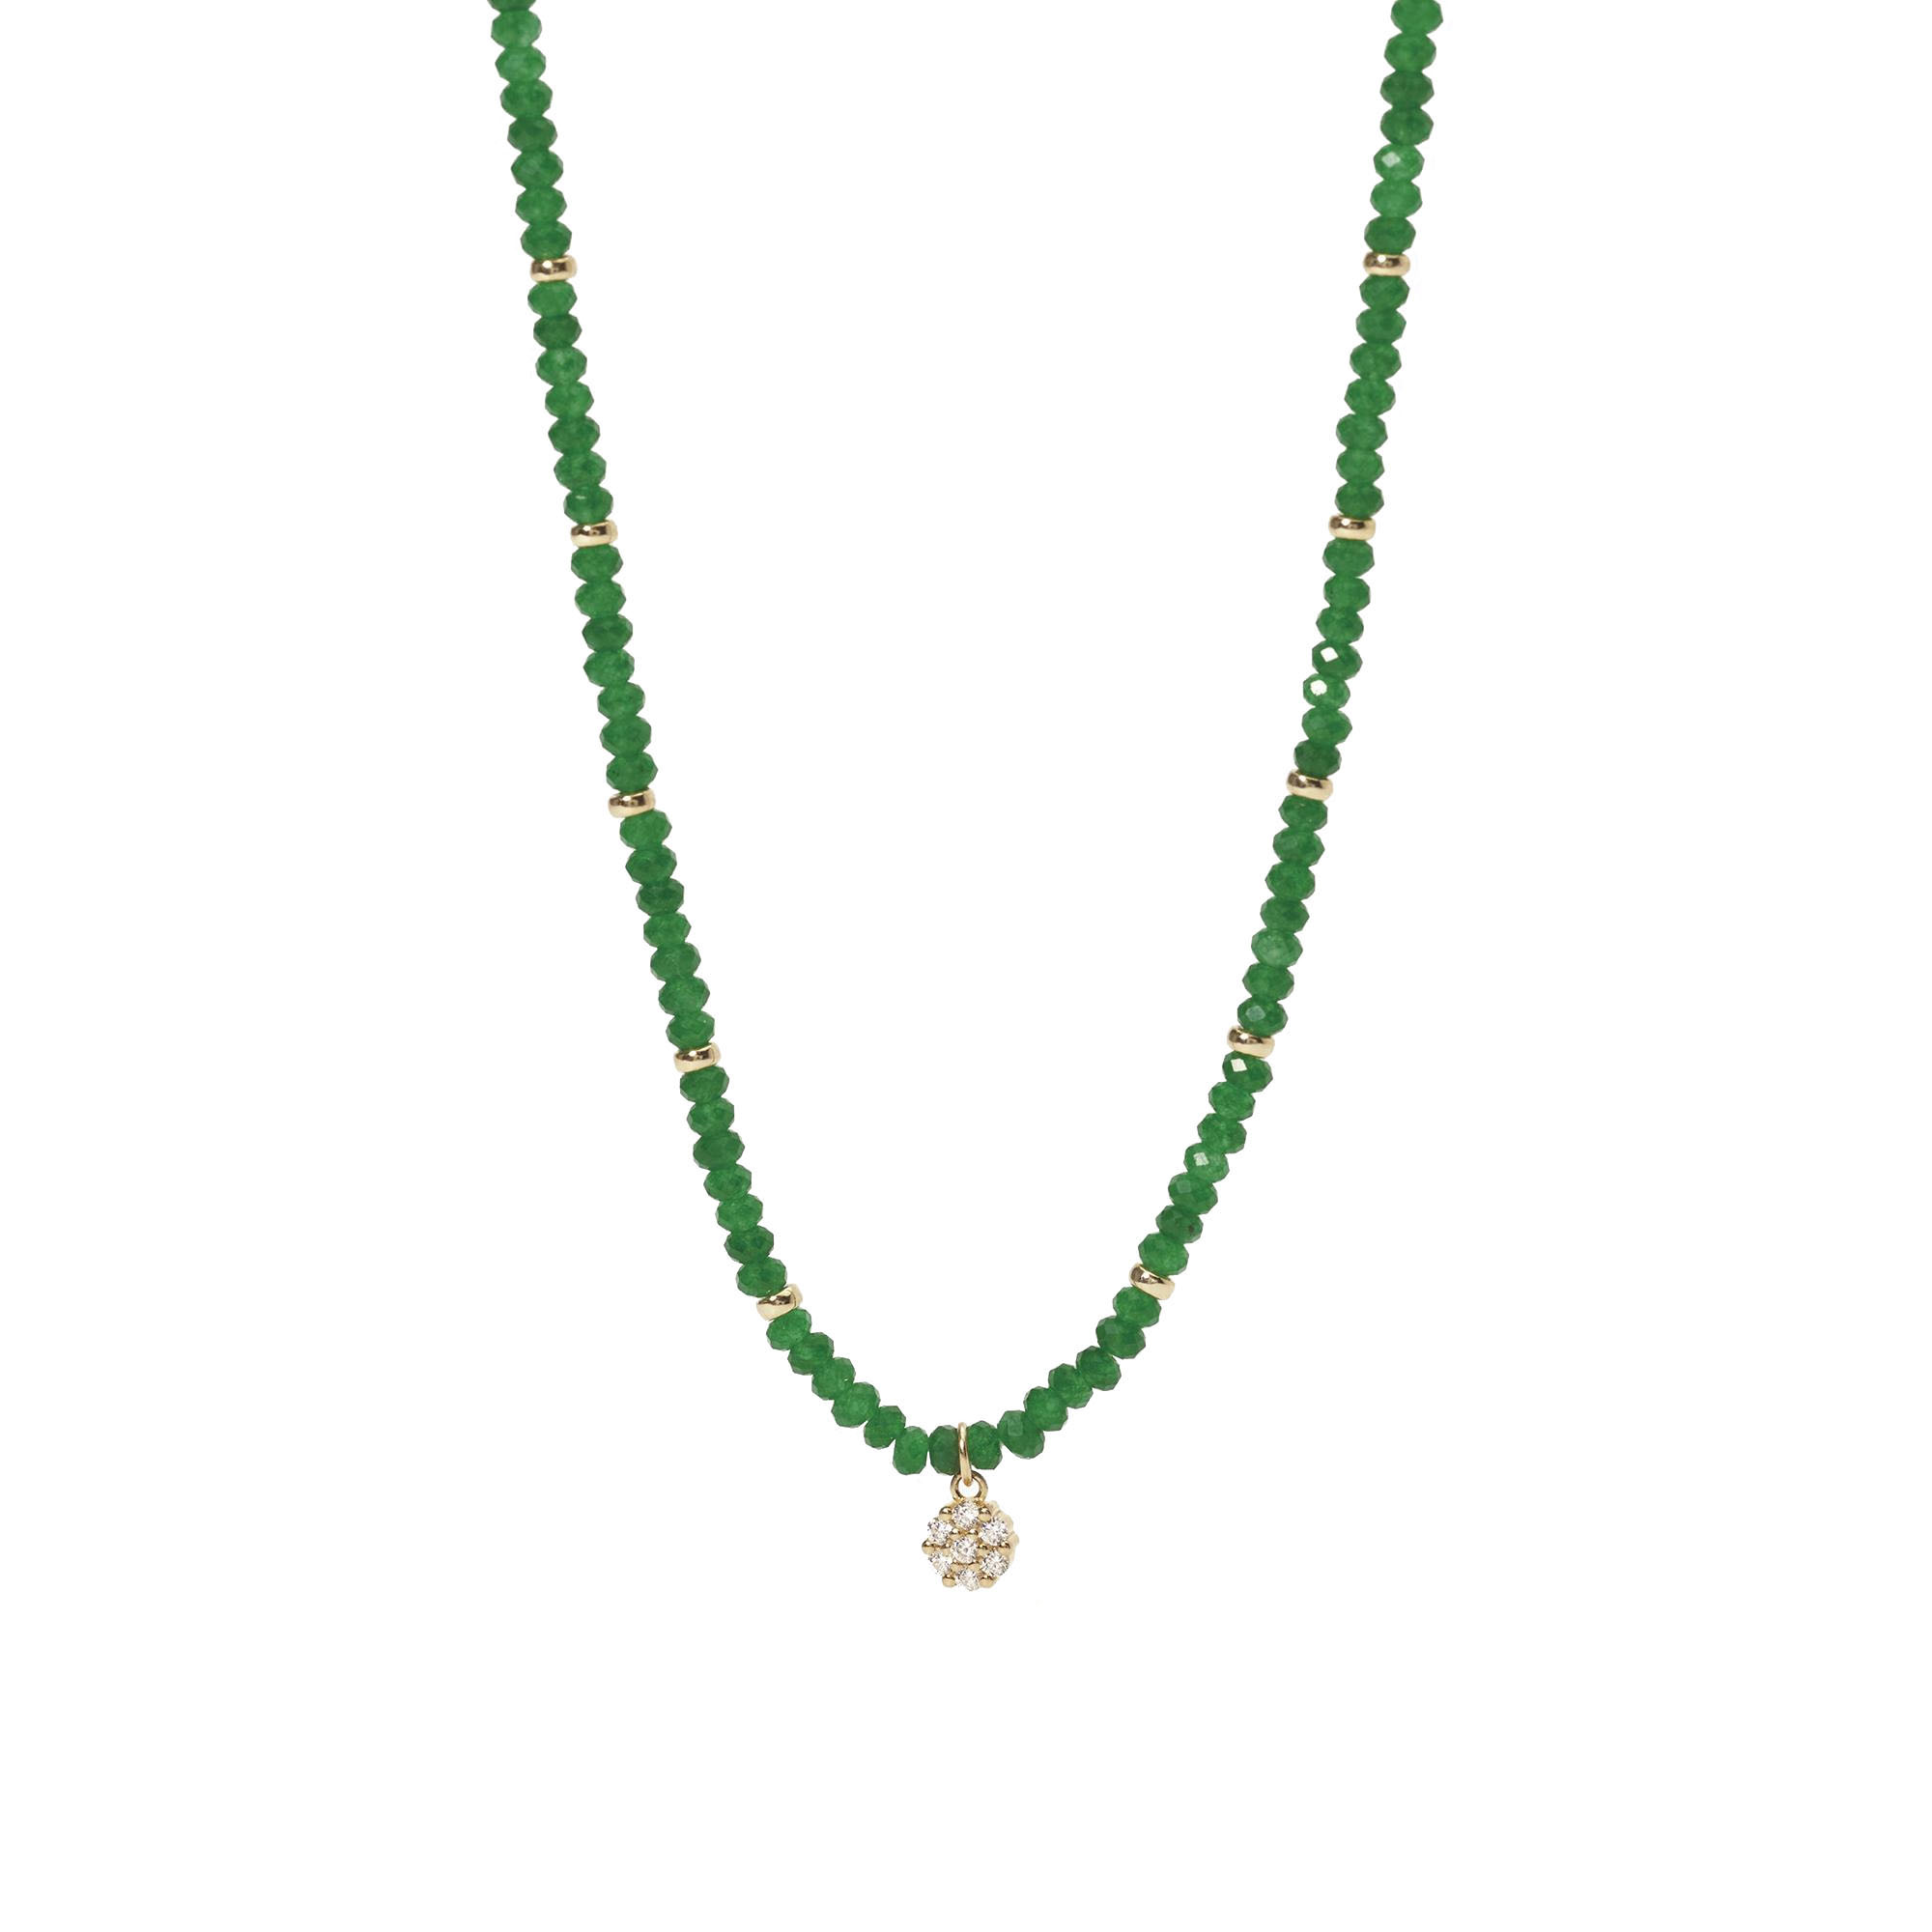 Girocollo Mabina in argento con Giada verde e charm a forma di fiore 553463